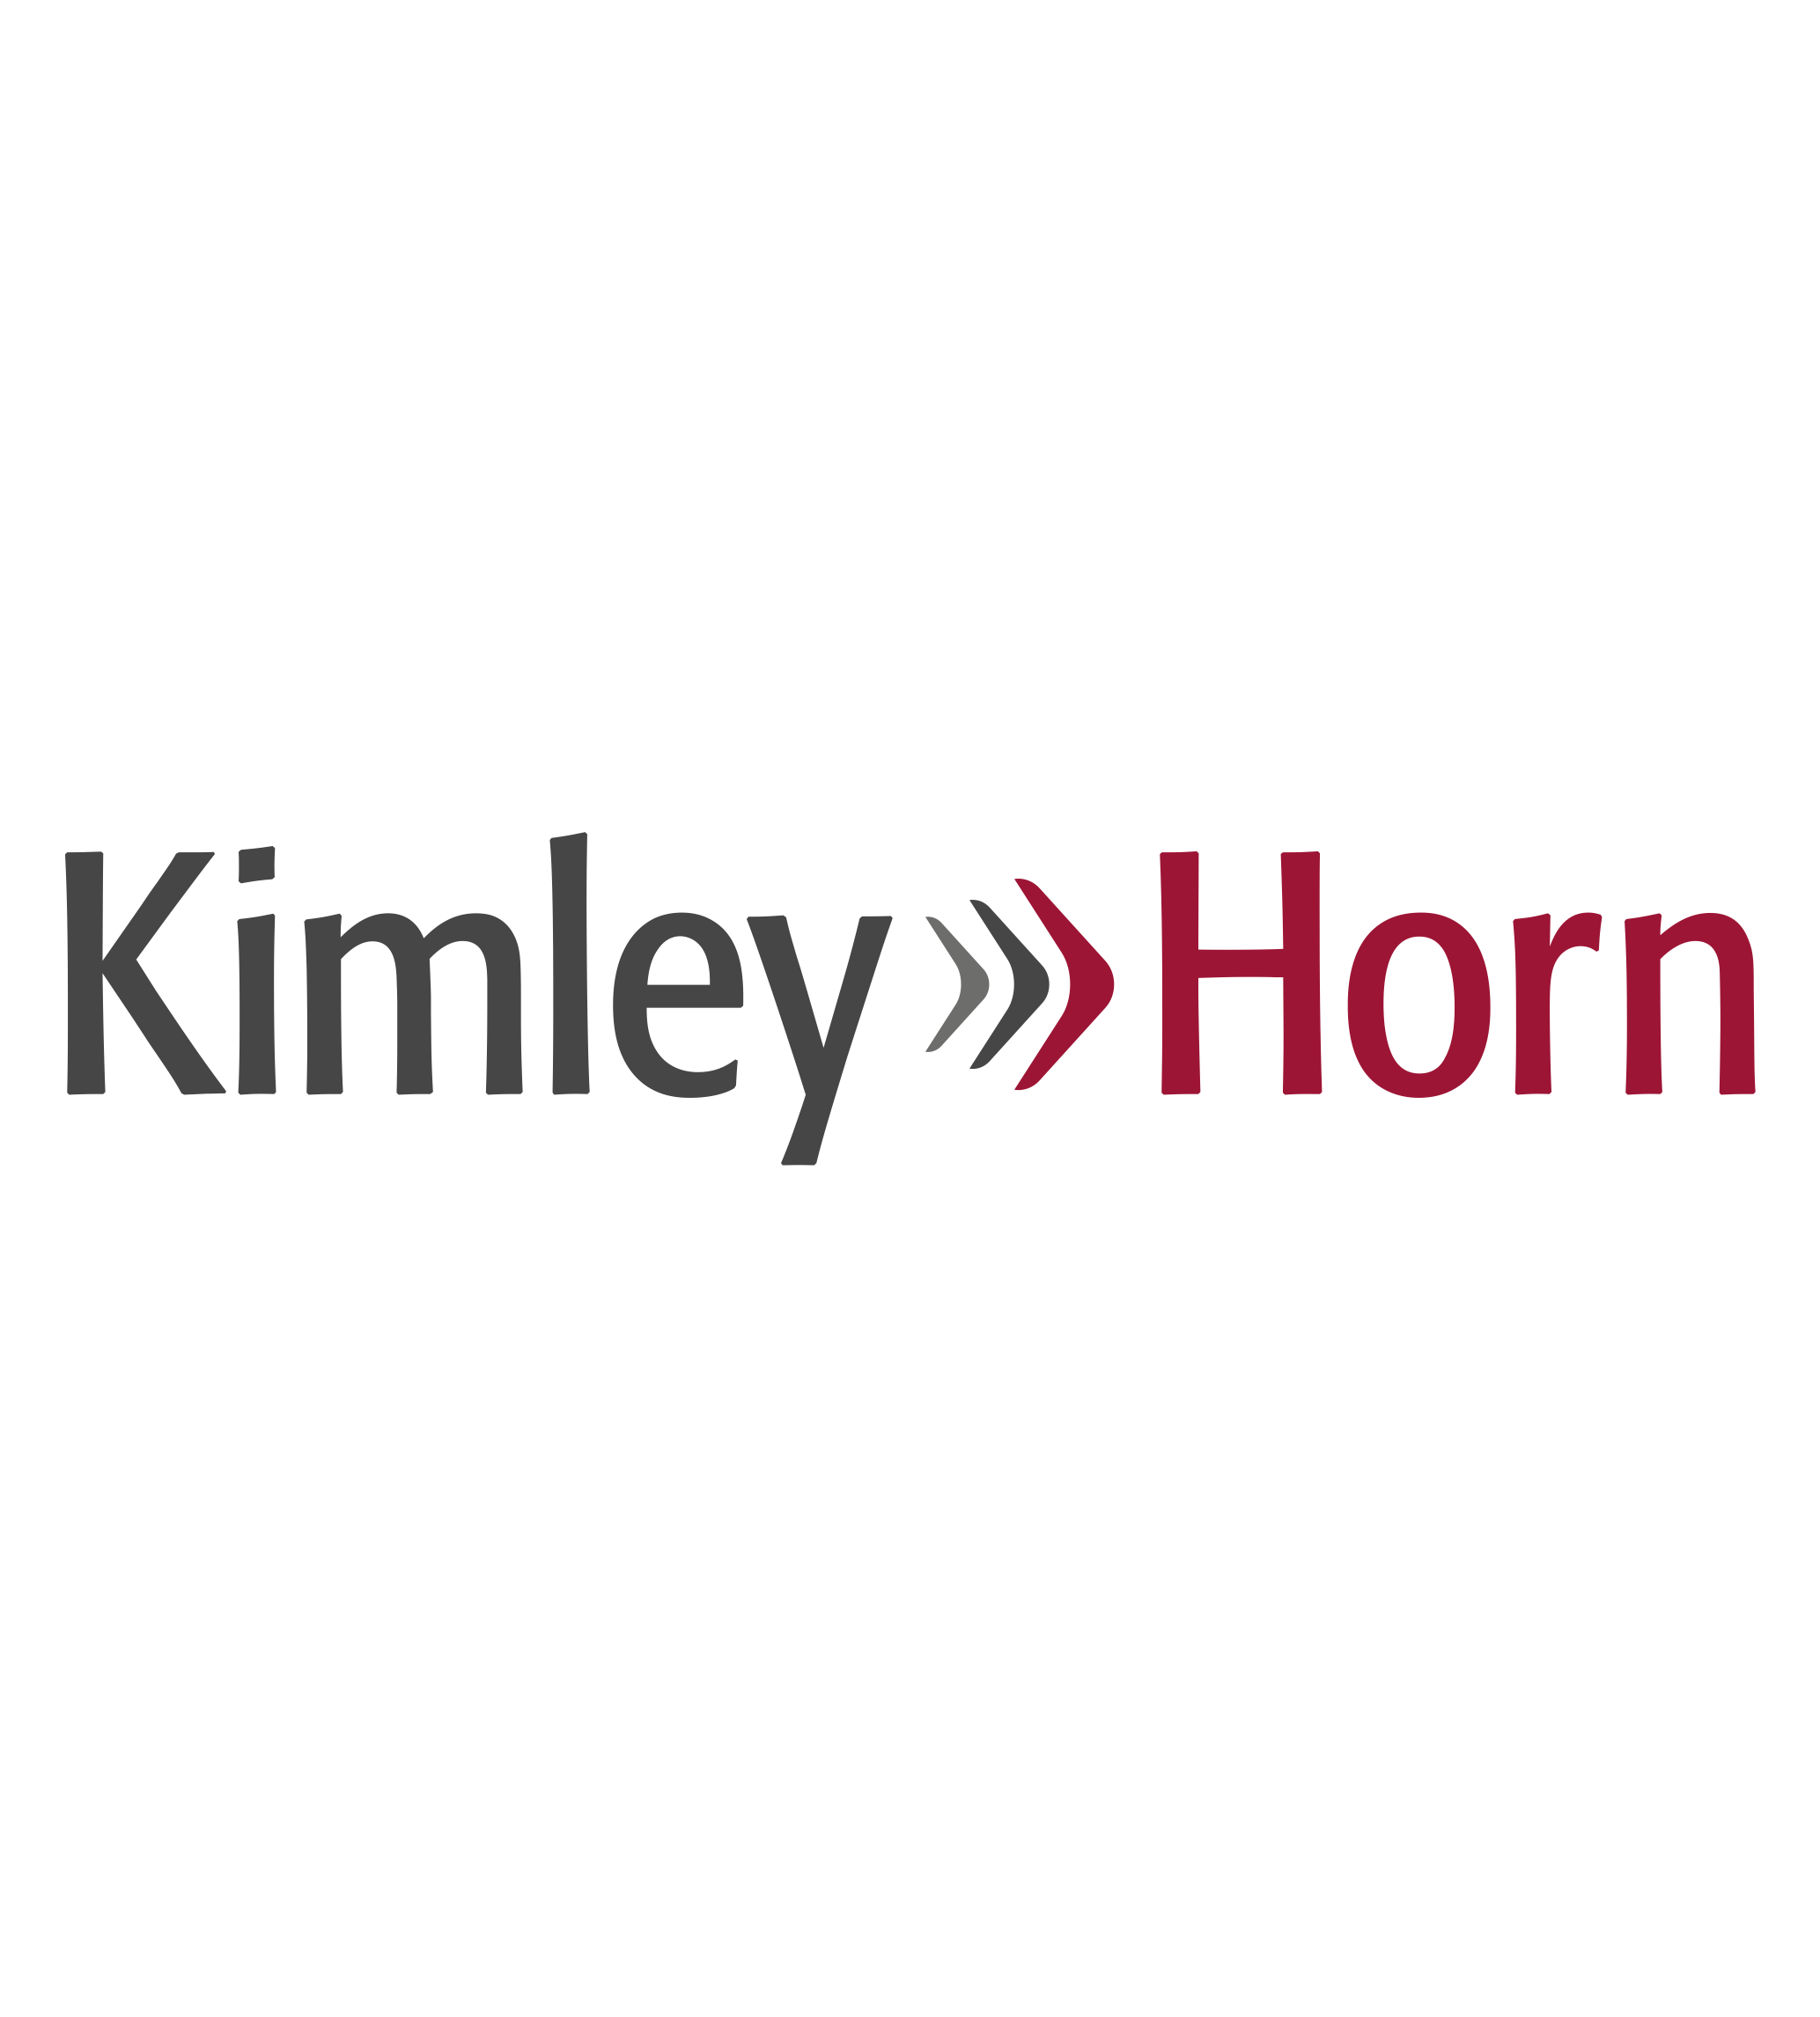 Kimley Horn logo